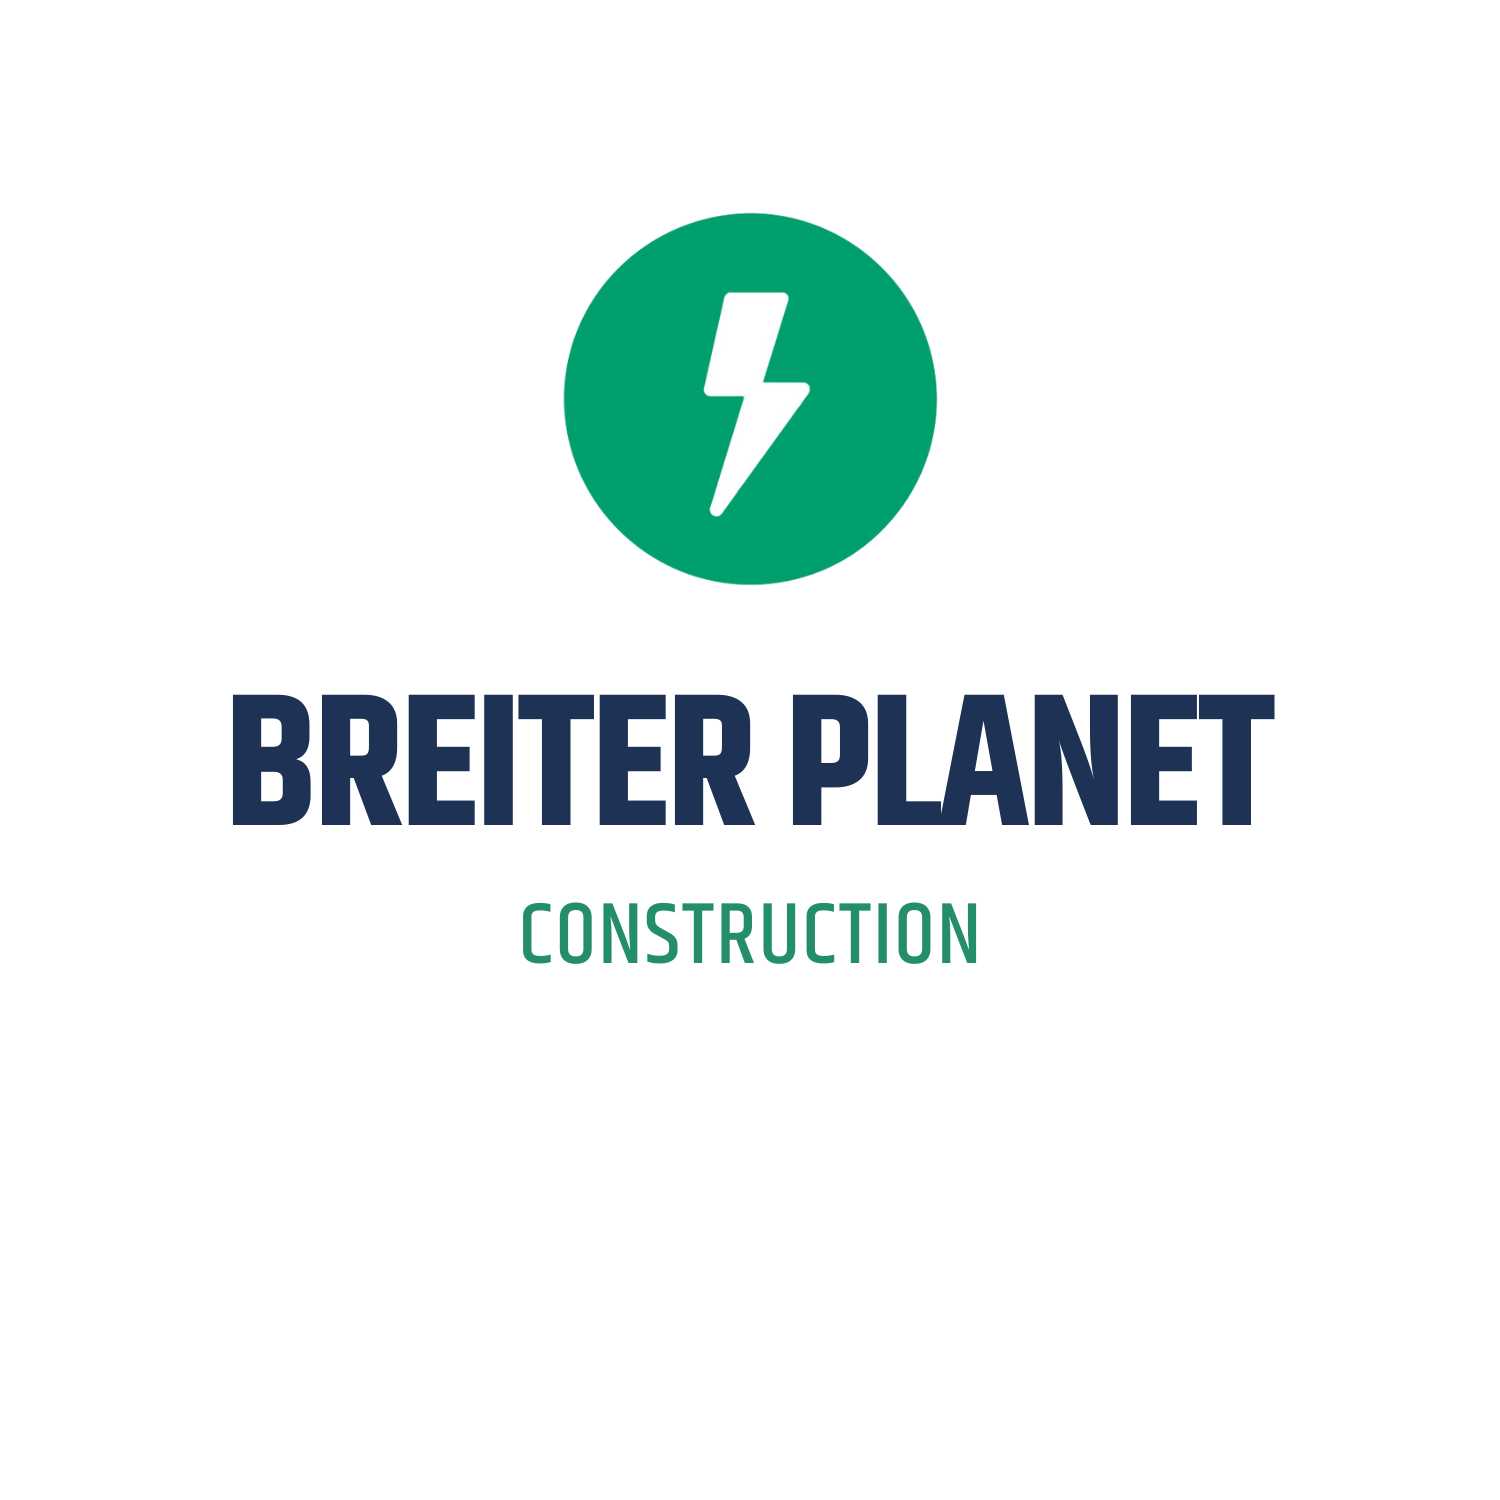 Breiter Planet Construction Logos 12.2020-1